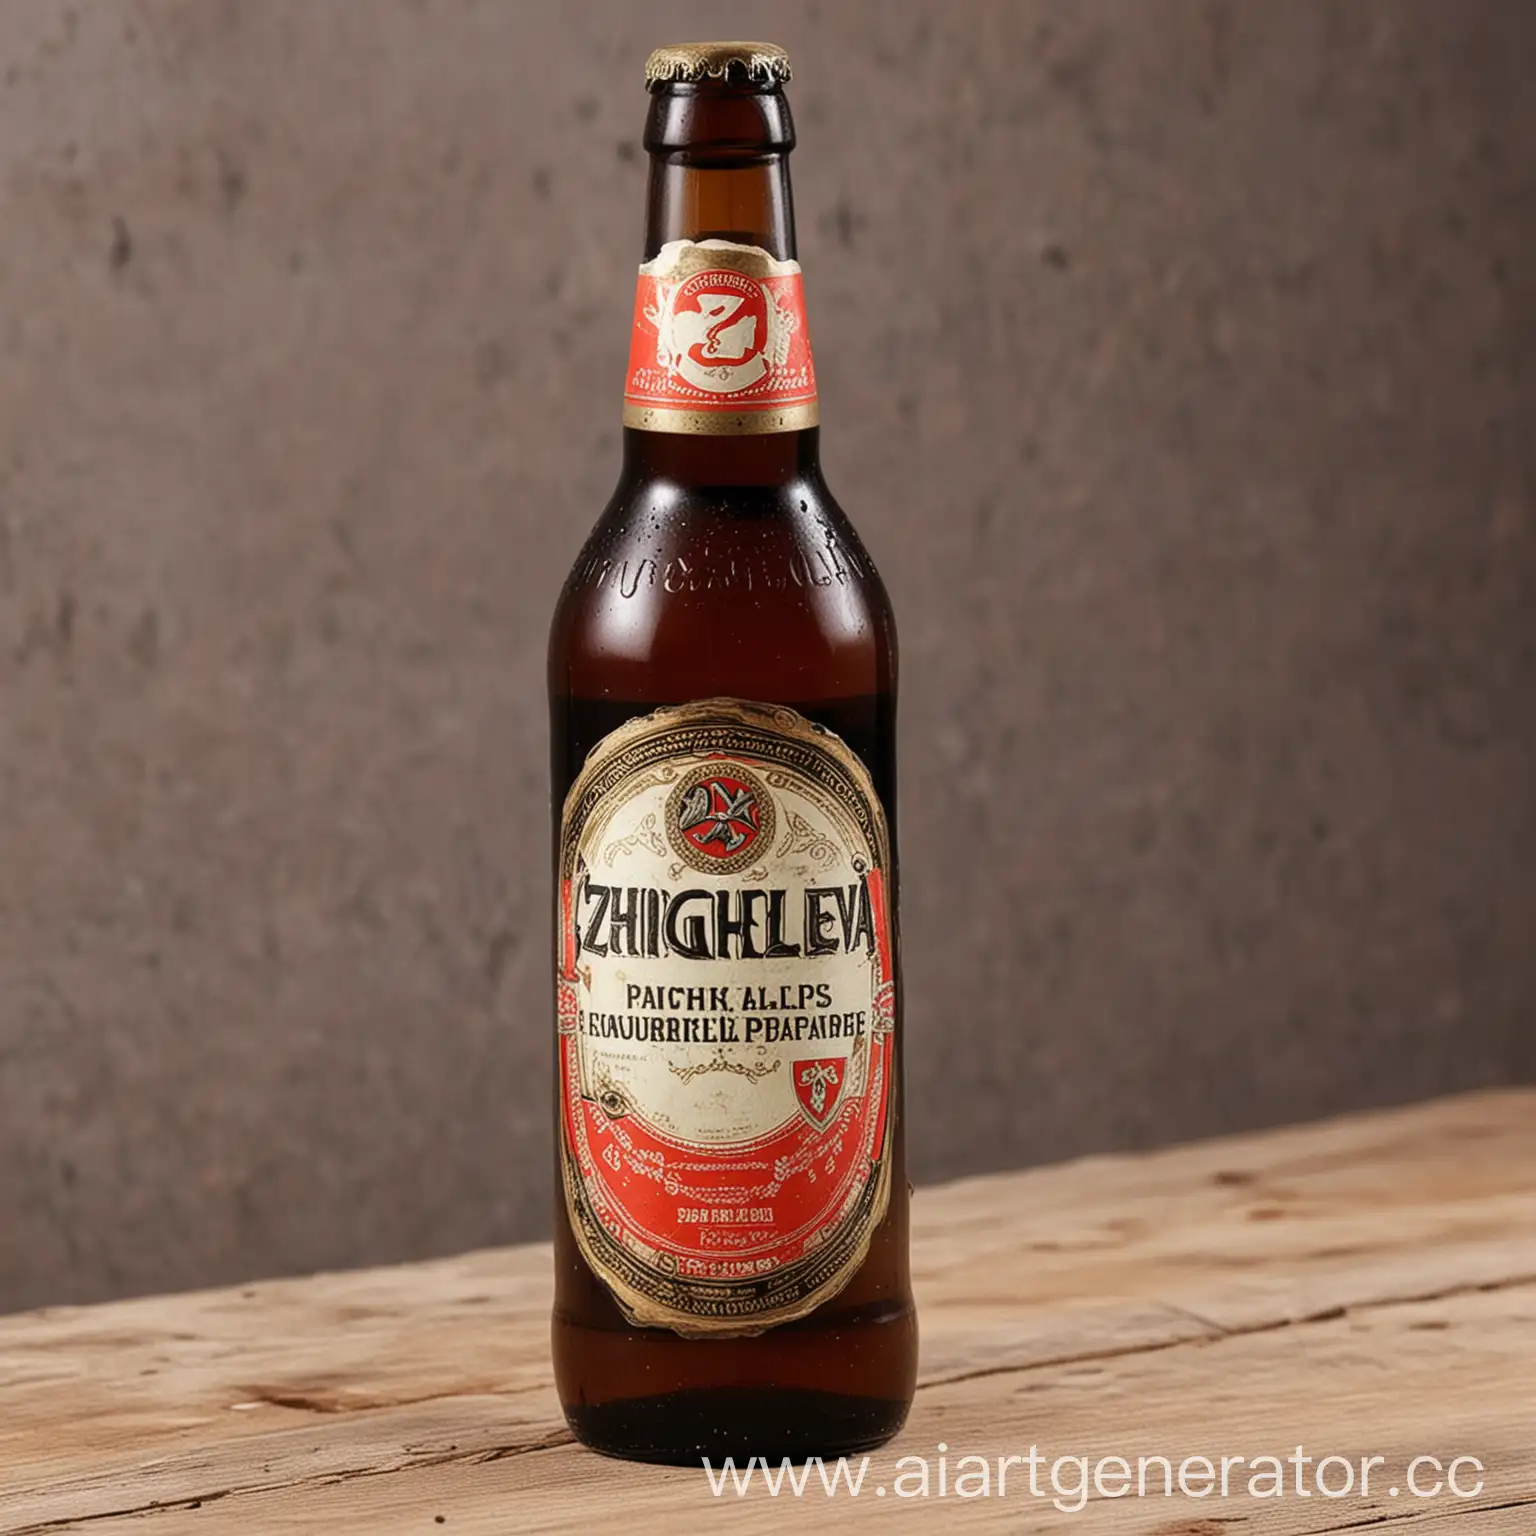 Bottle of beer with lable "Zhiguleva"